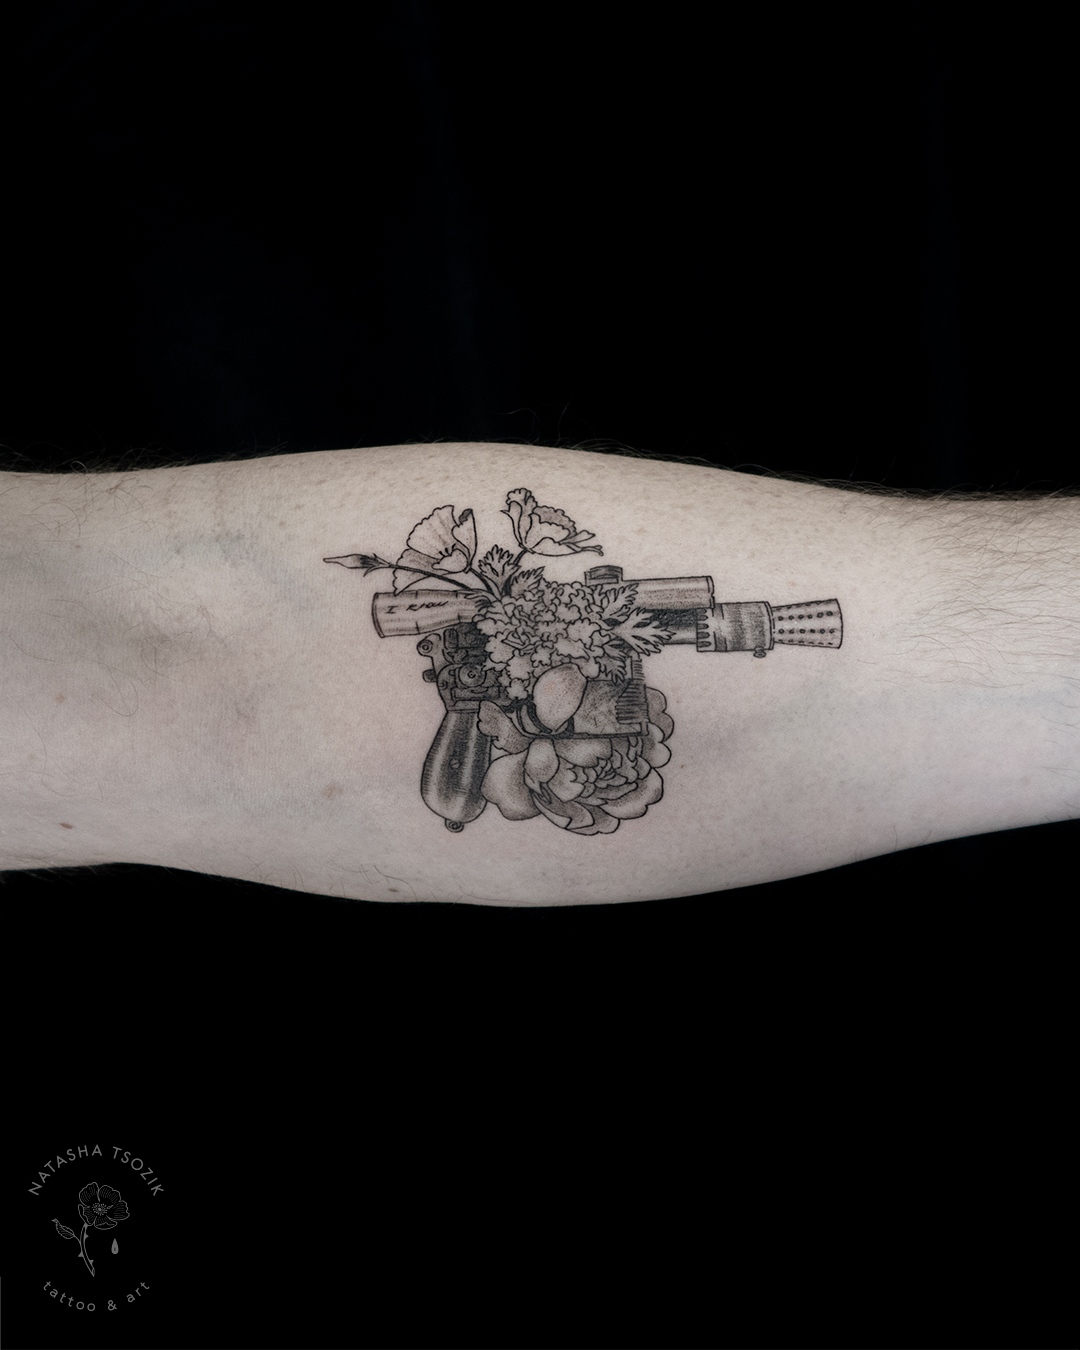 Star Wars Inspired Tattoos. Han Solo's gun with flowers fine line tattoo on a forearm by Natasha Tsozik